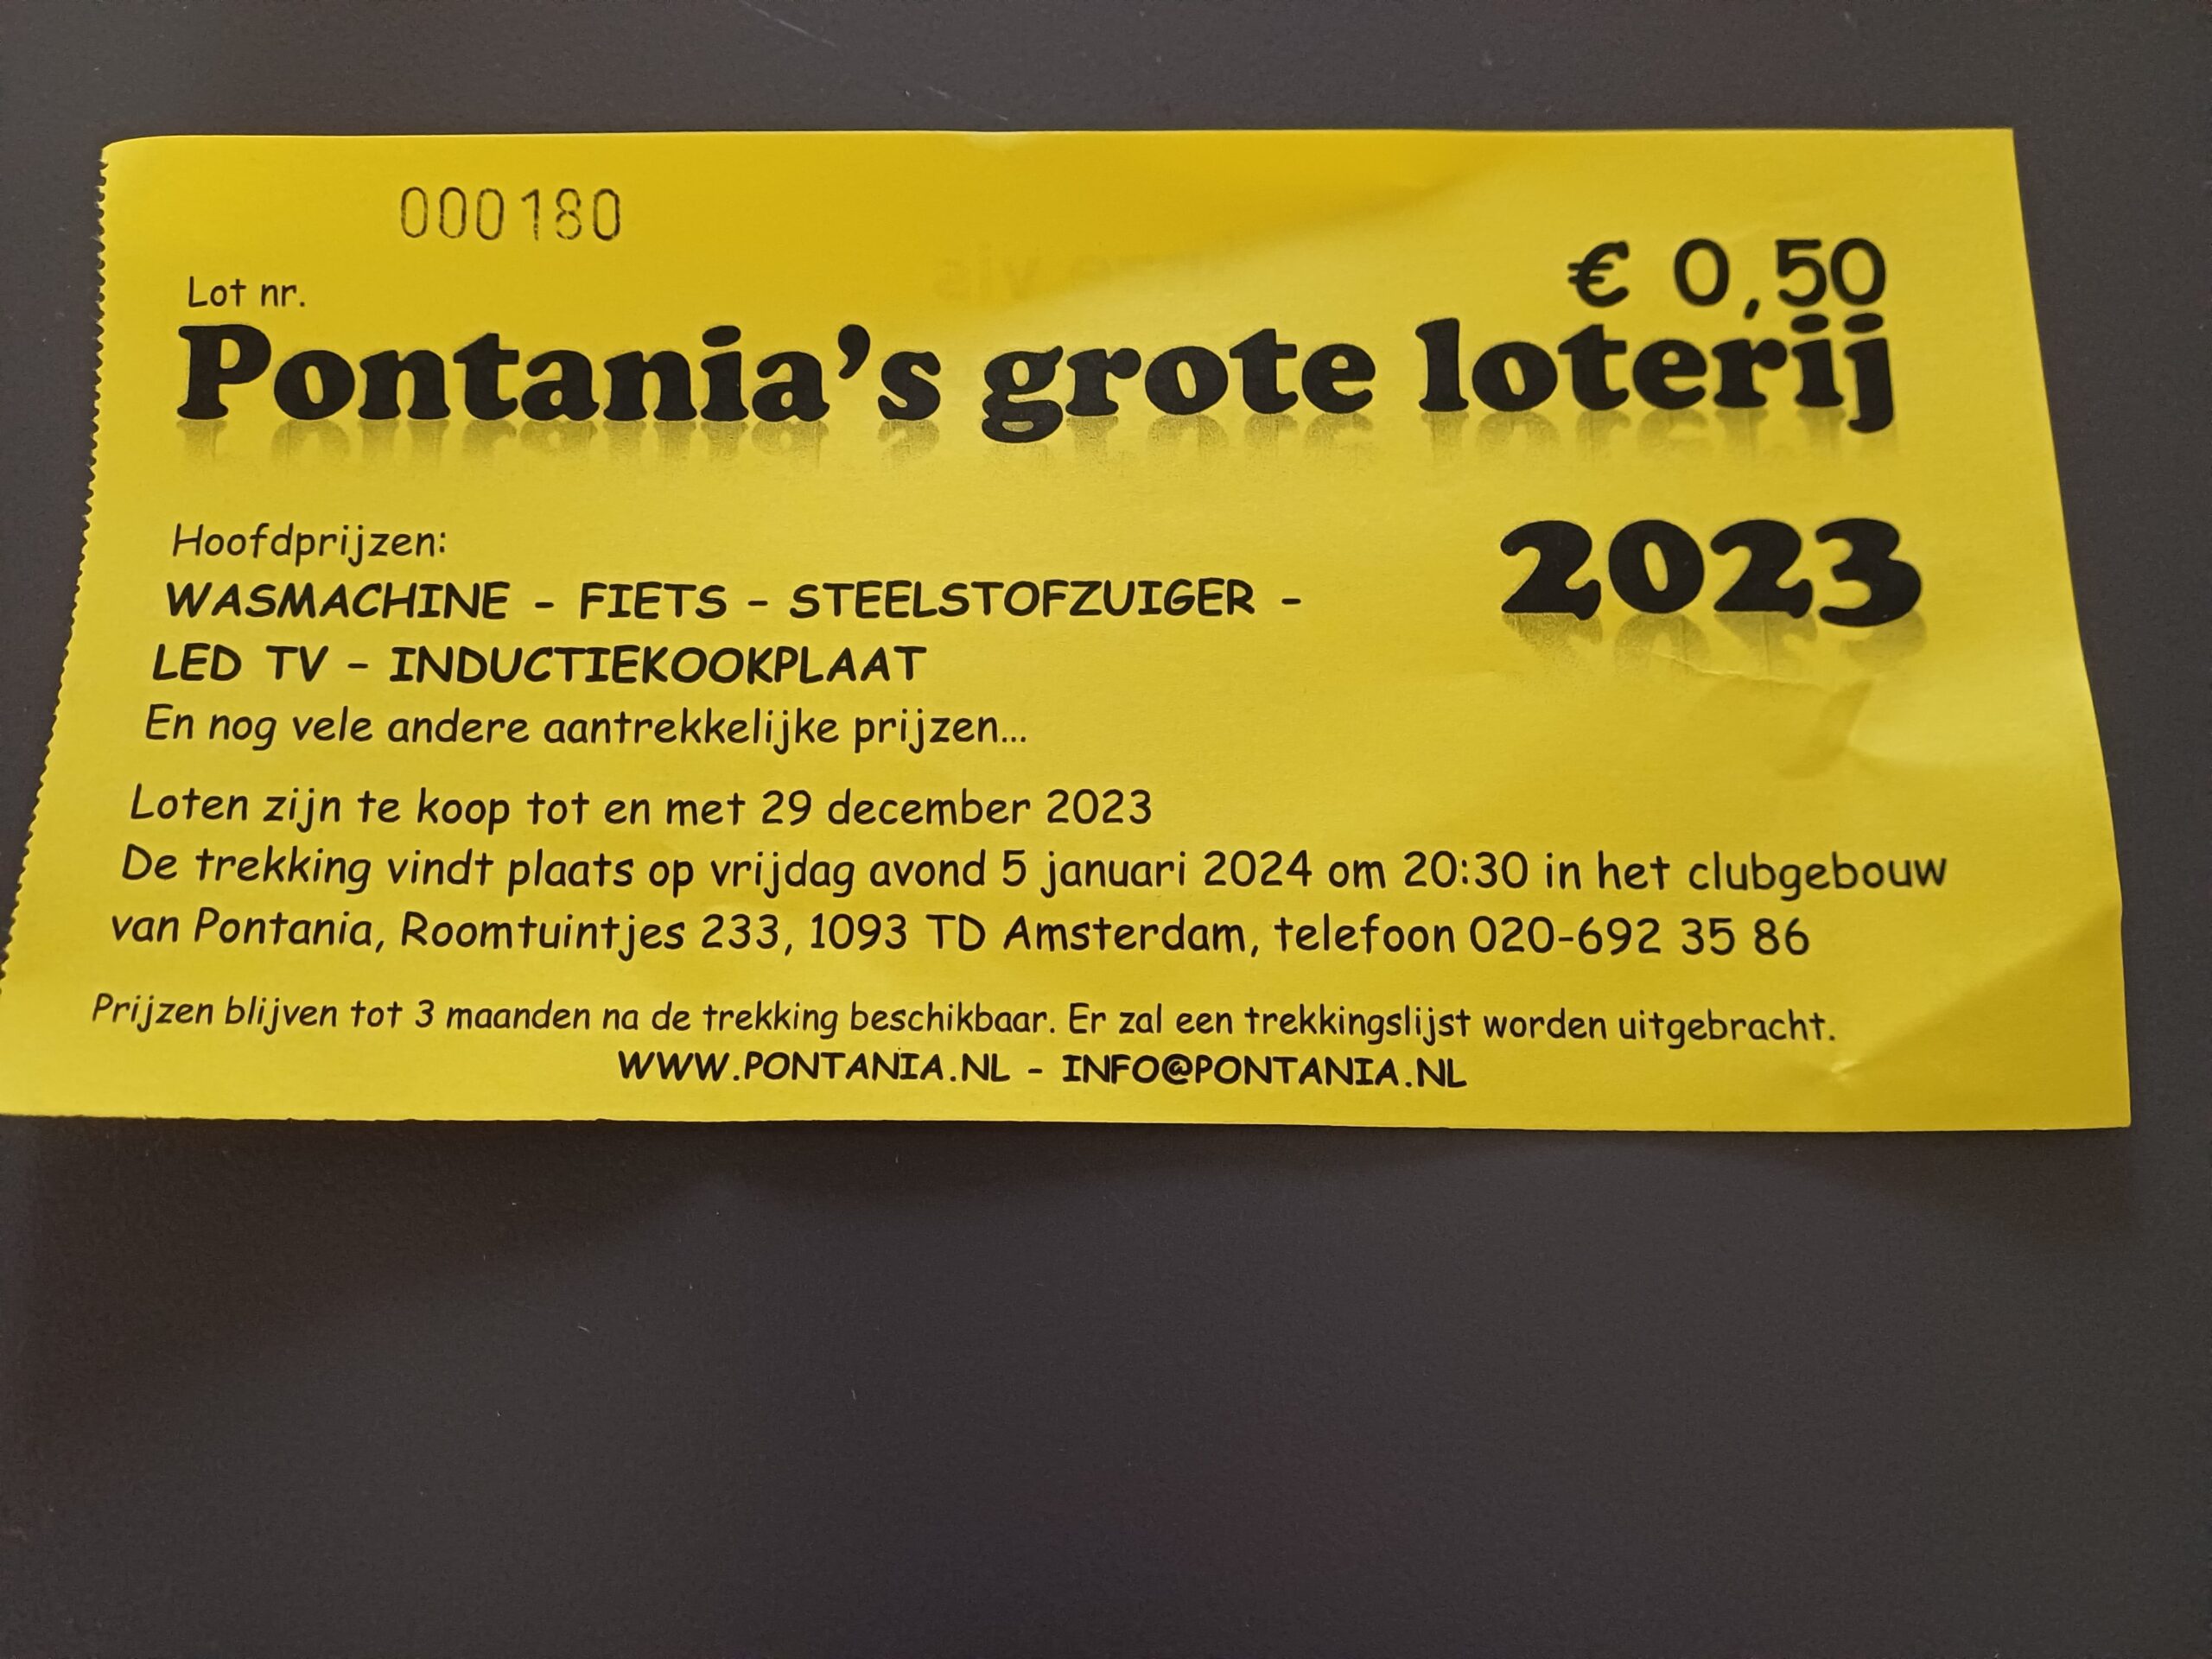 Pontania’s grote loterij is getrokken